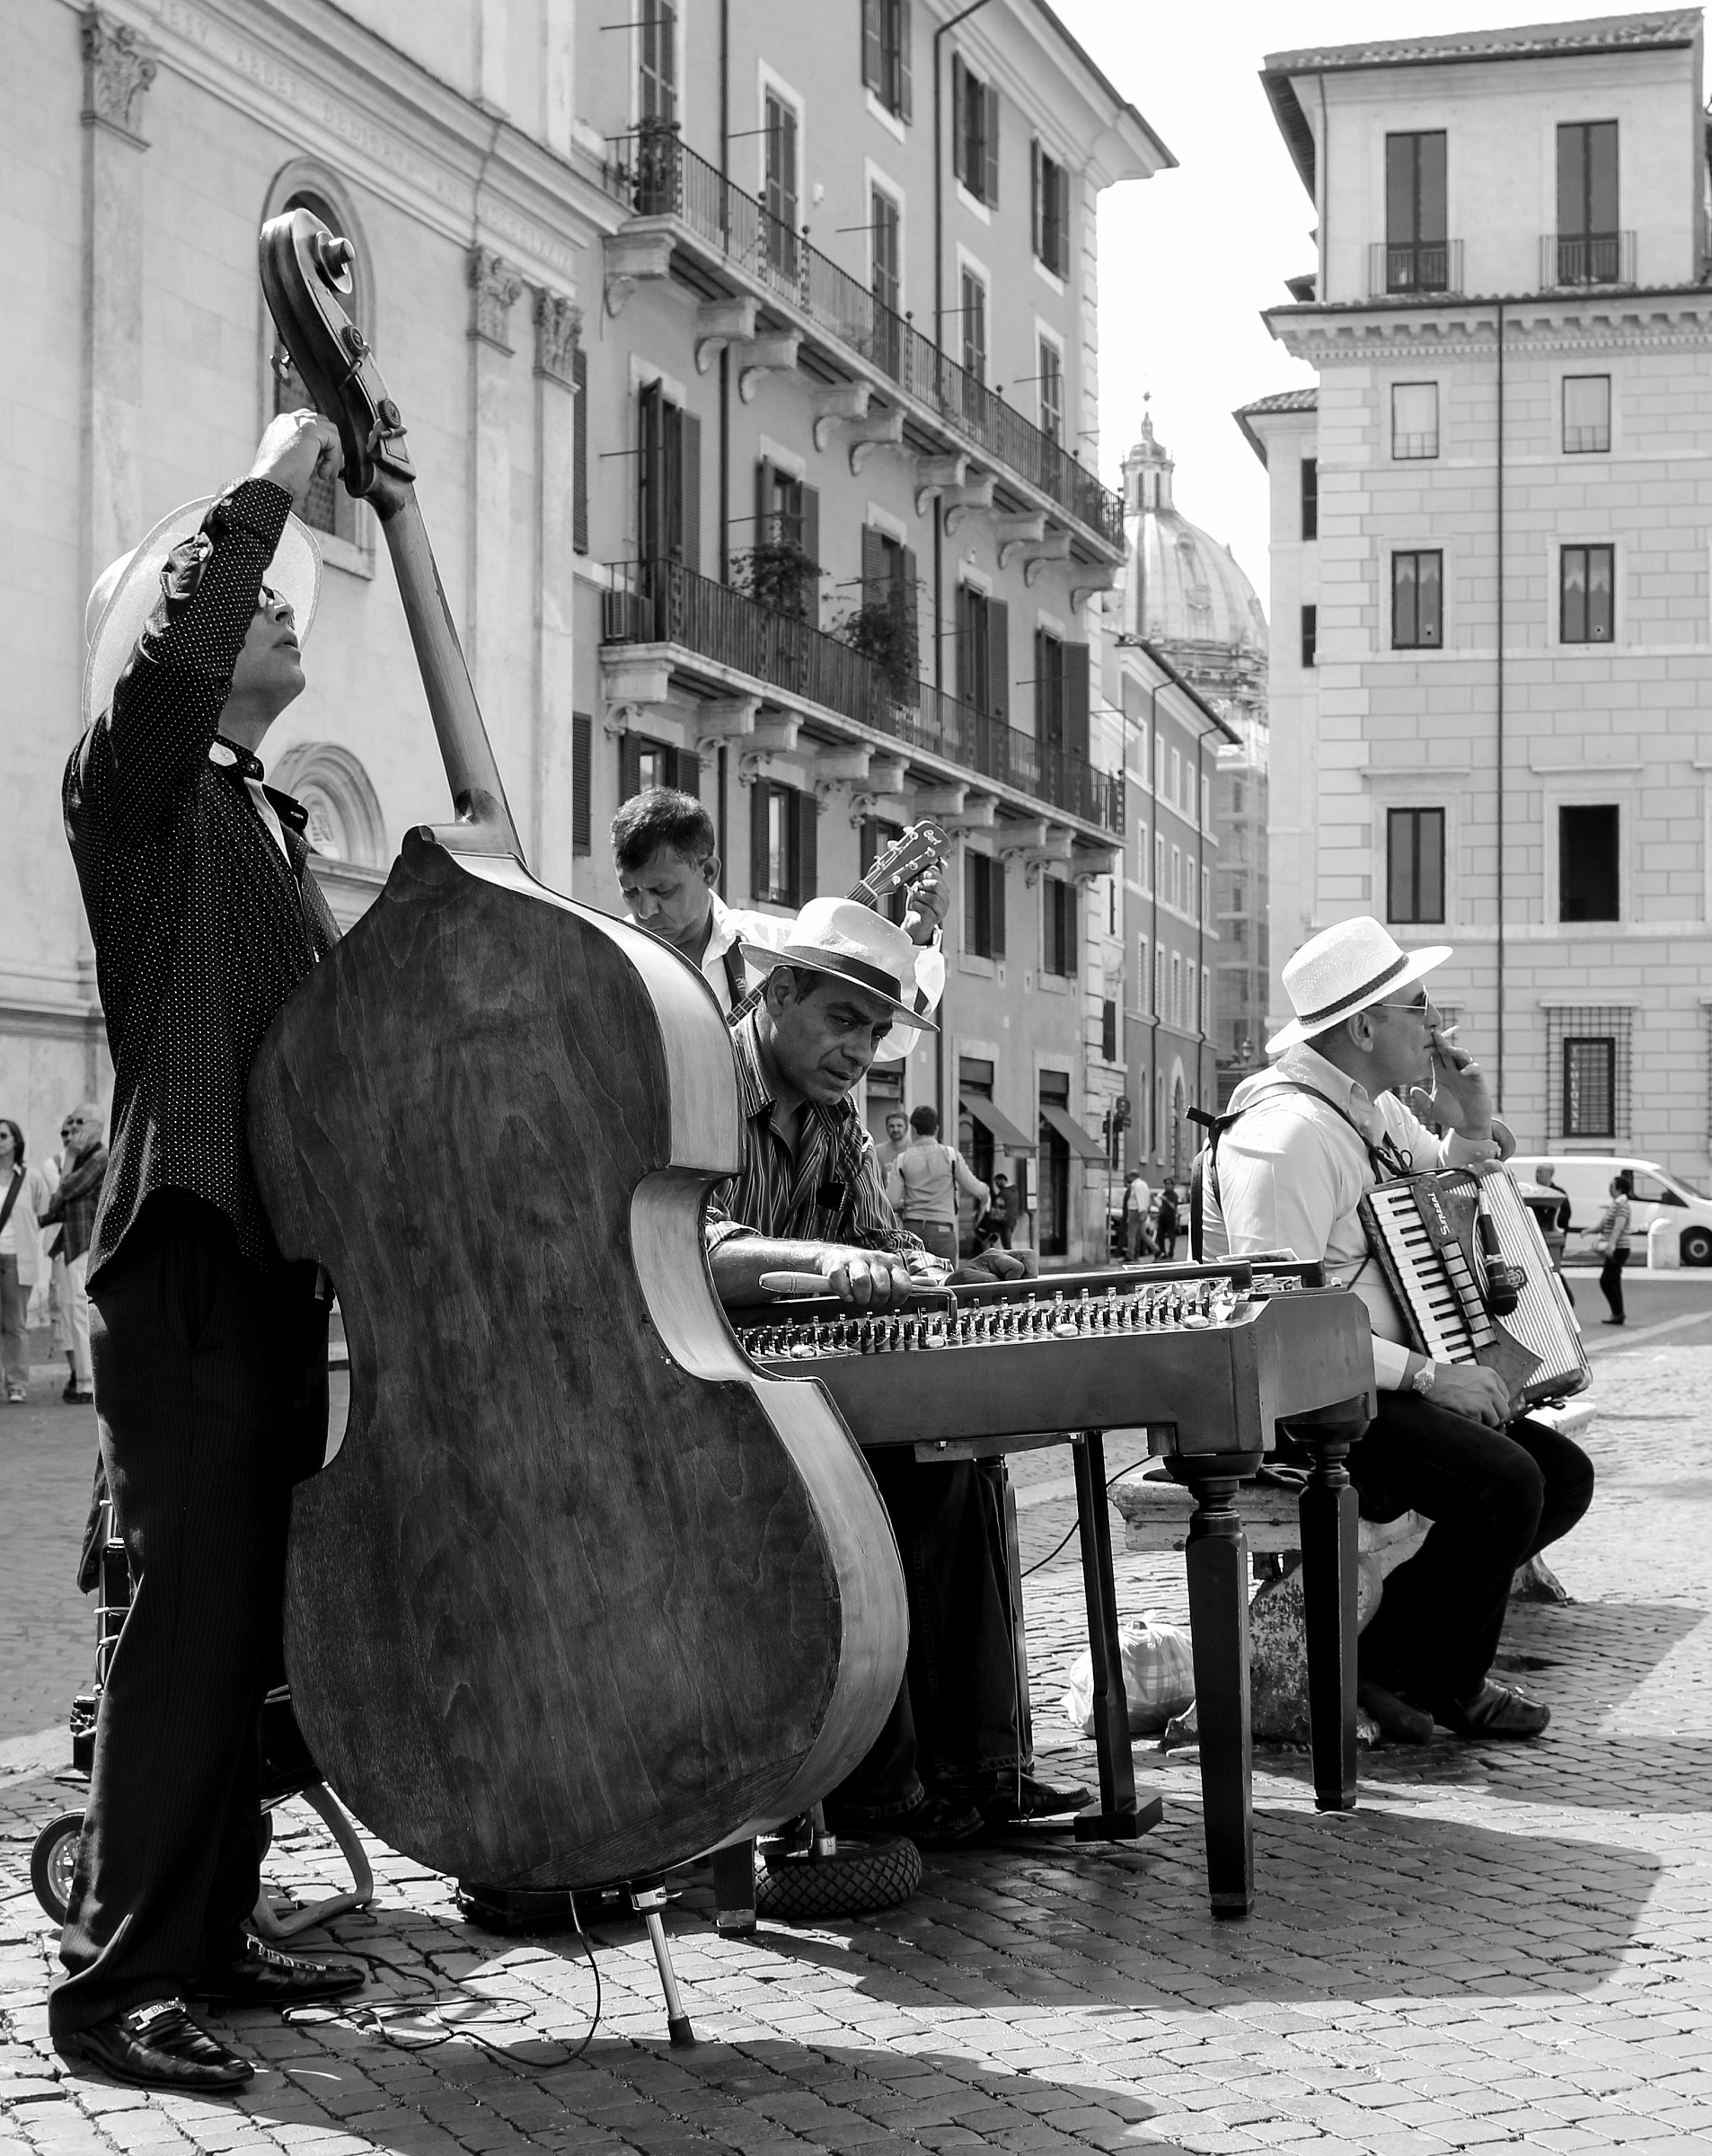 Music on street...